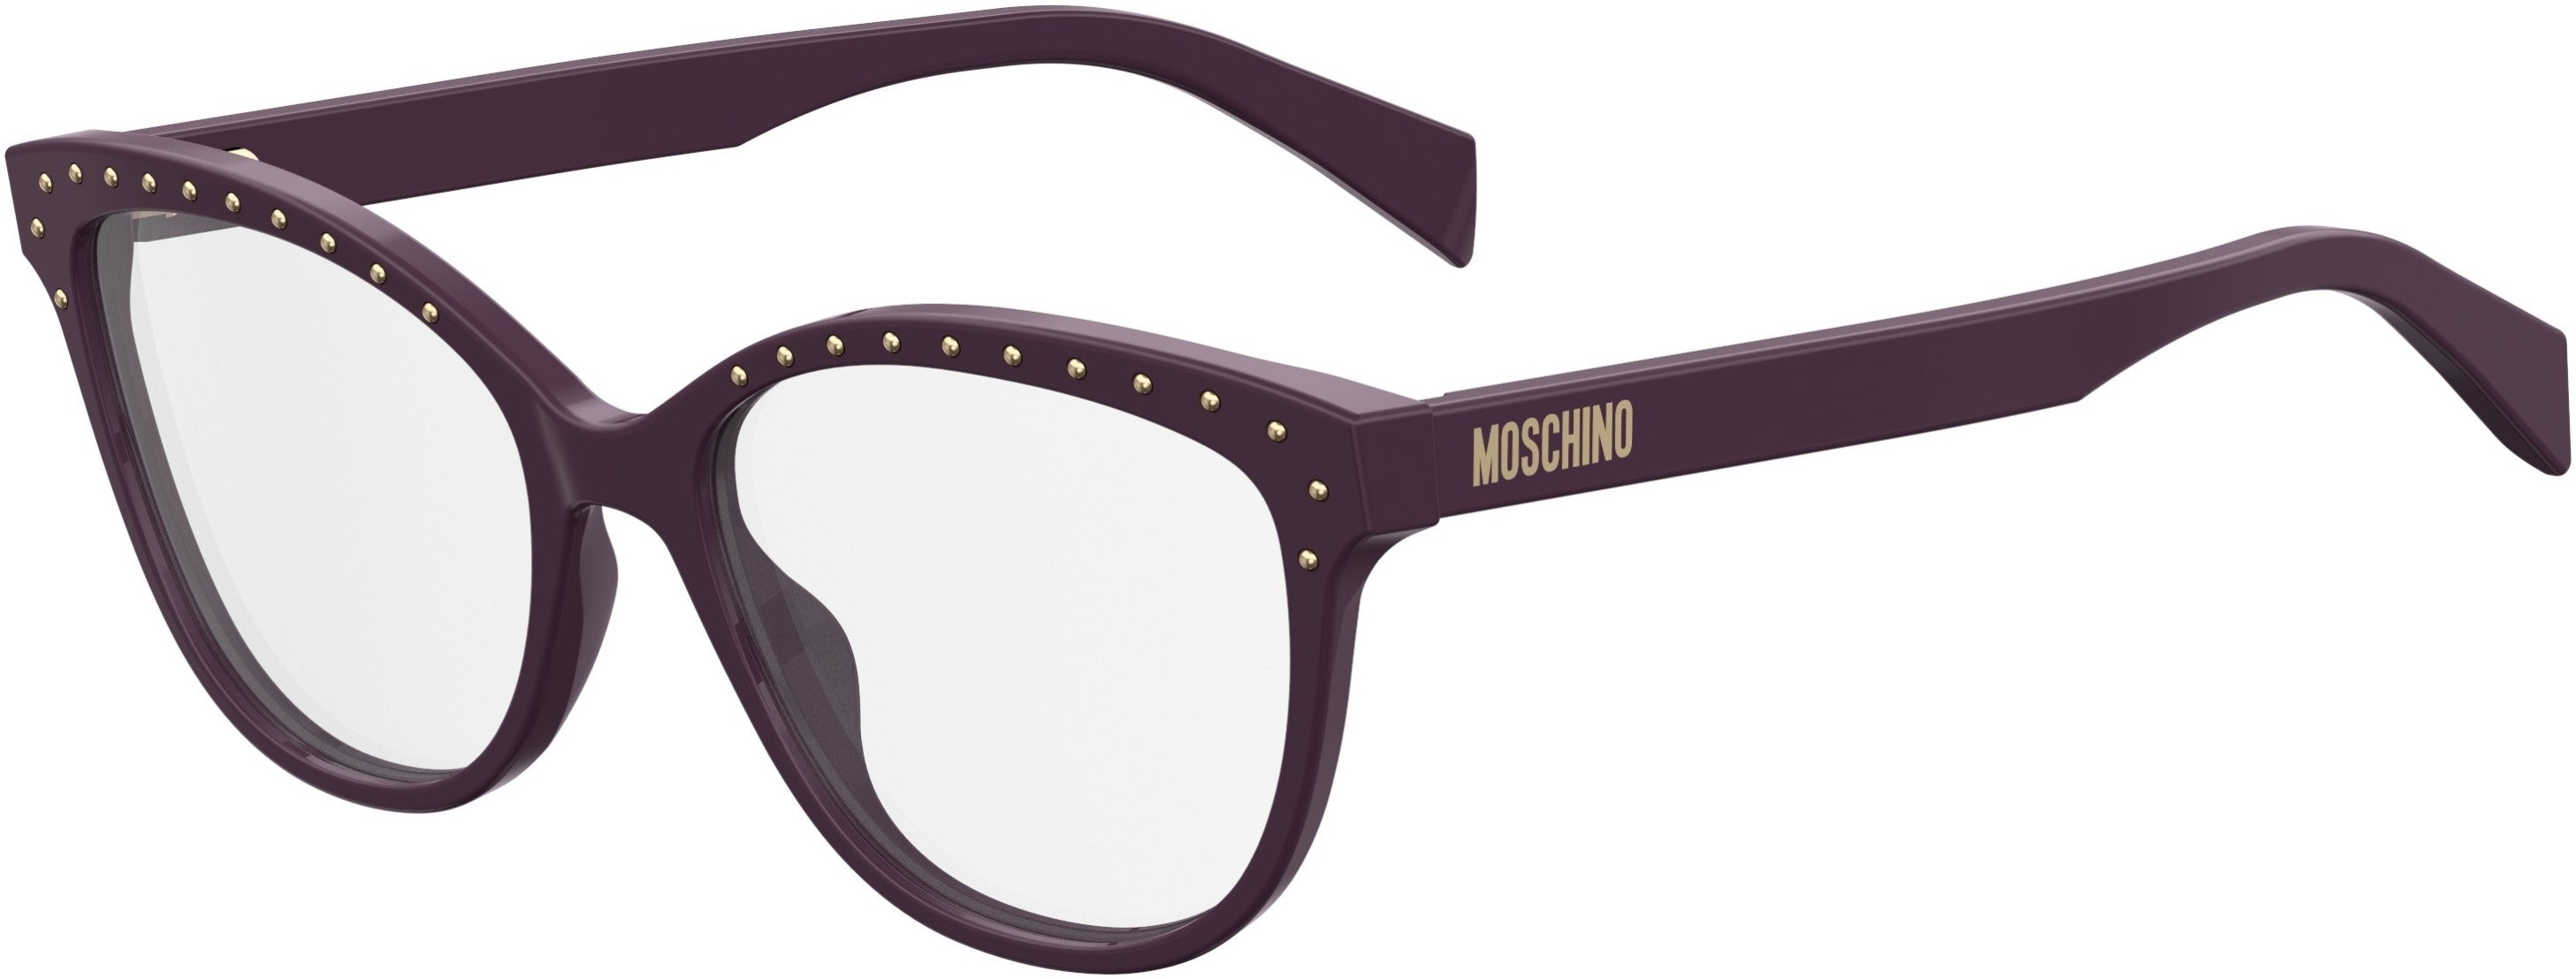  Moschino 506 Oval Modified Eyeglasses 0B3V-0B3V  Violet (00 Demo Lens)